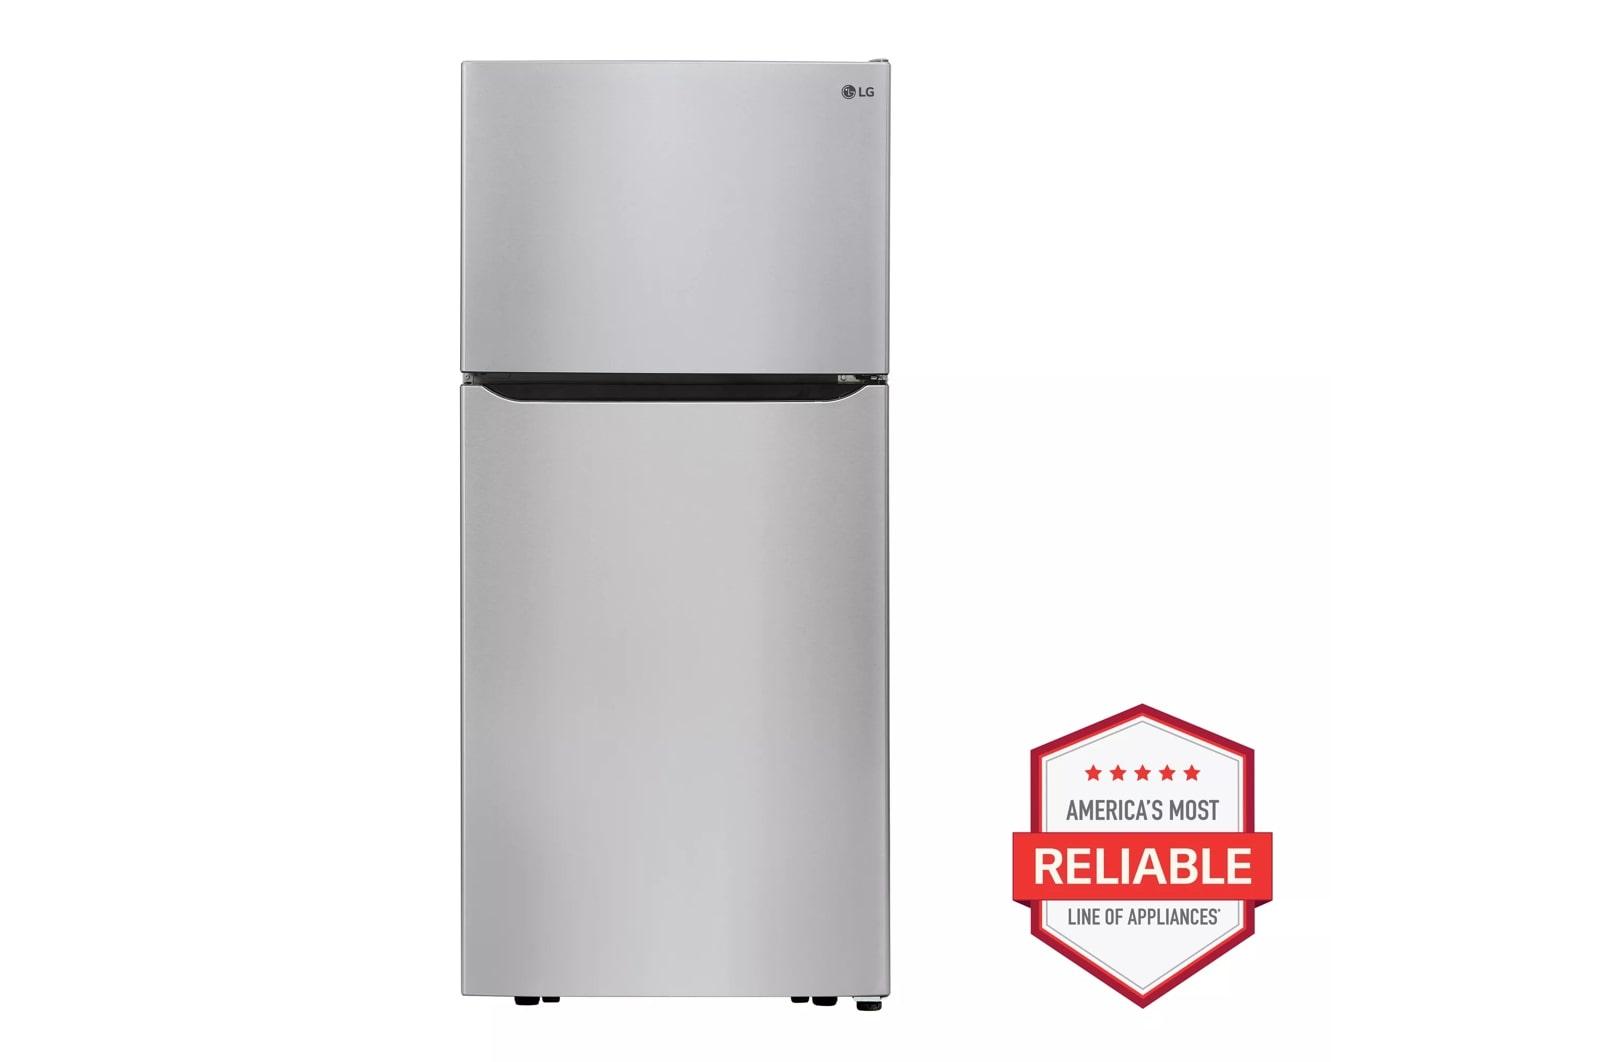 LG Appliances 20 cu. ft. Top Freezer Refrigerator